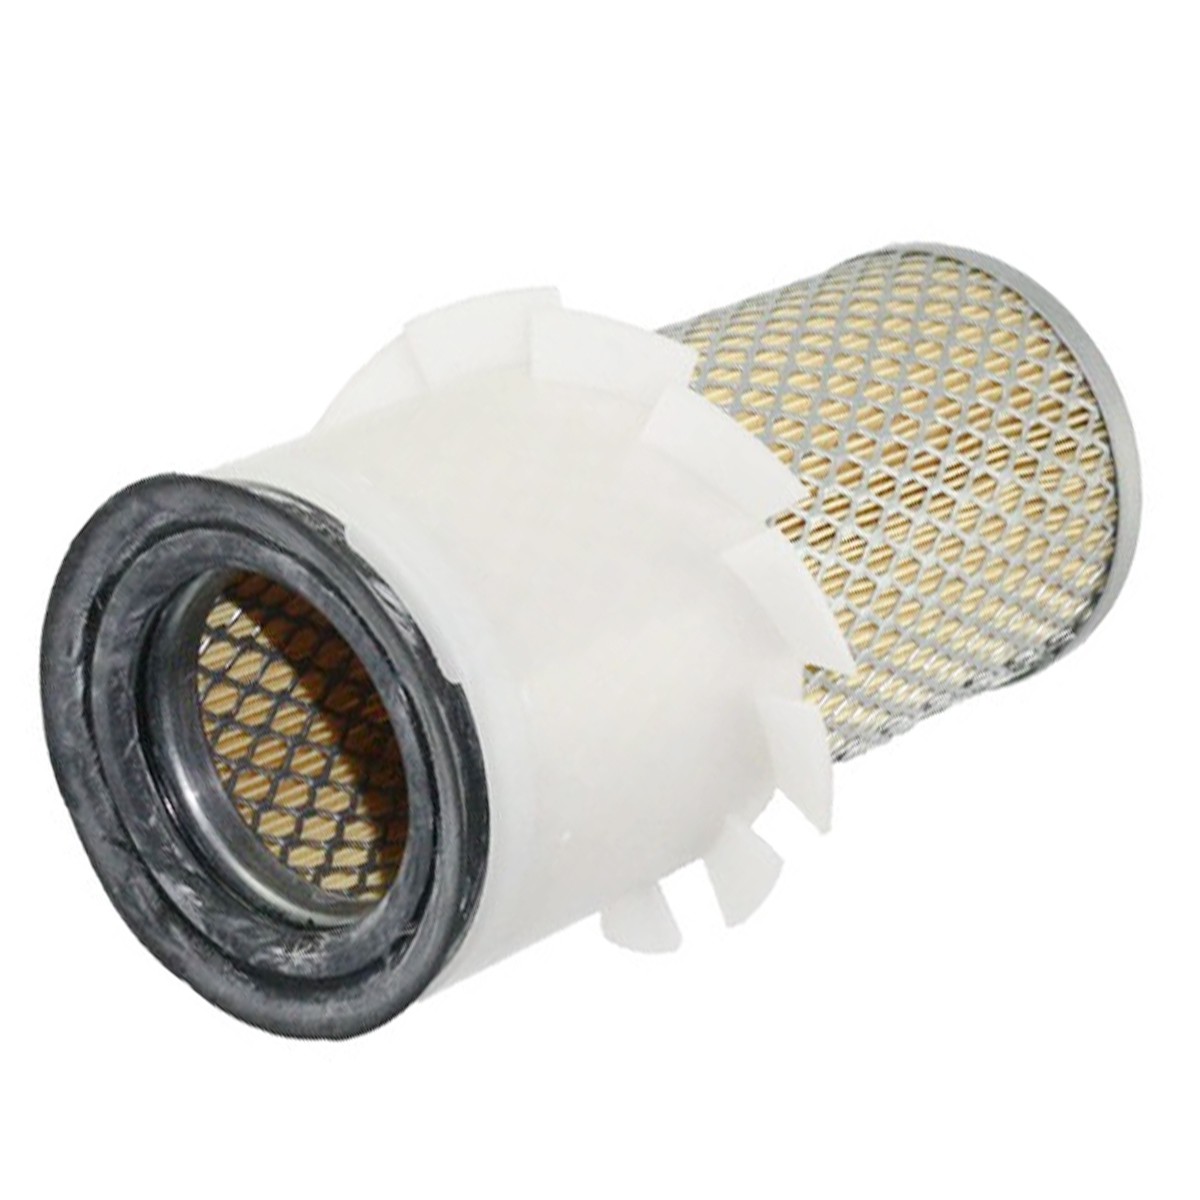 Kubota air filter / 82 x 185 mm / Yanmar / John Deere / Fleetguard / SA 16066